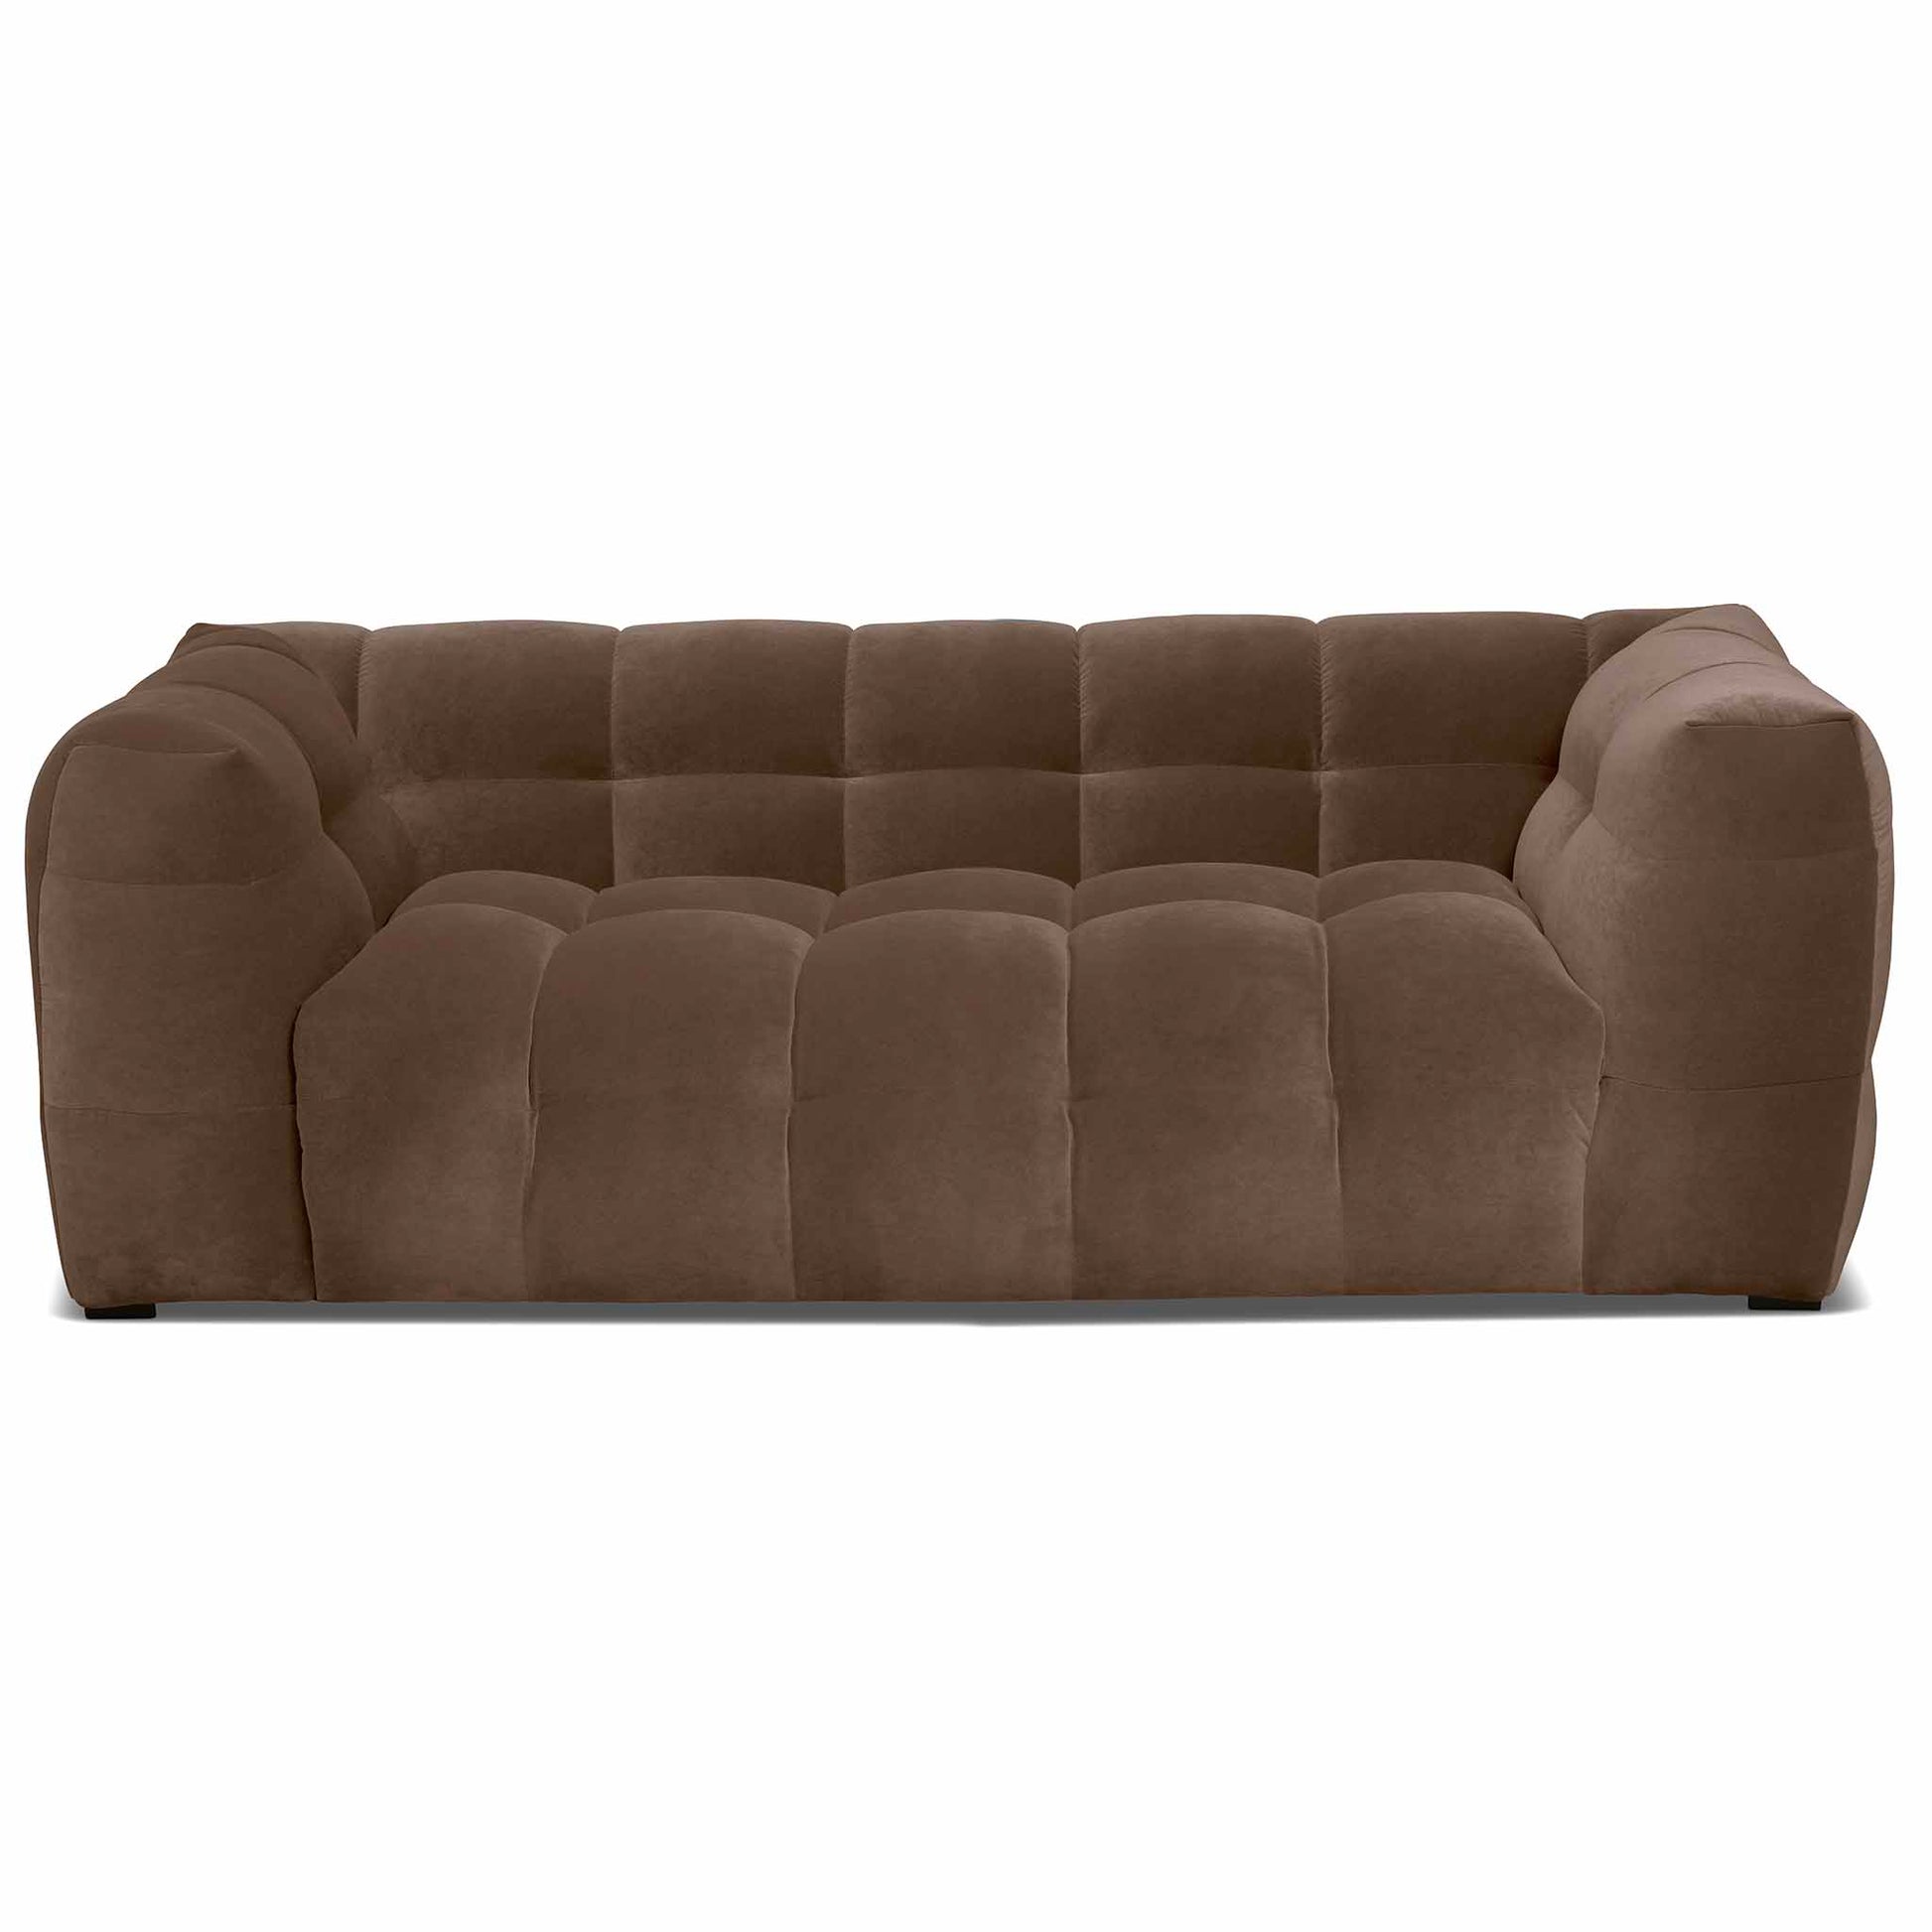 Caesar liten bubblig design soffa brun sammet